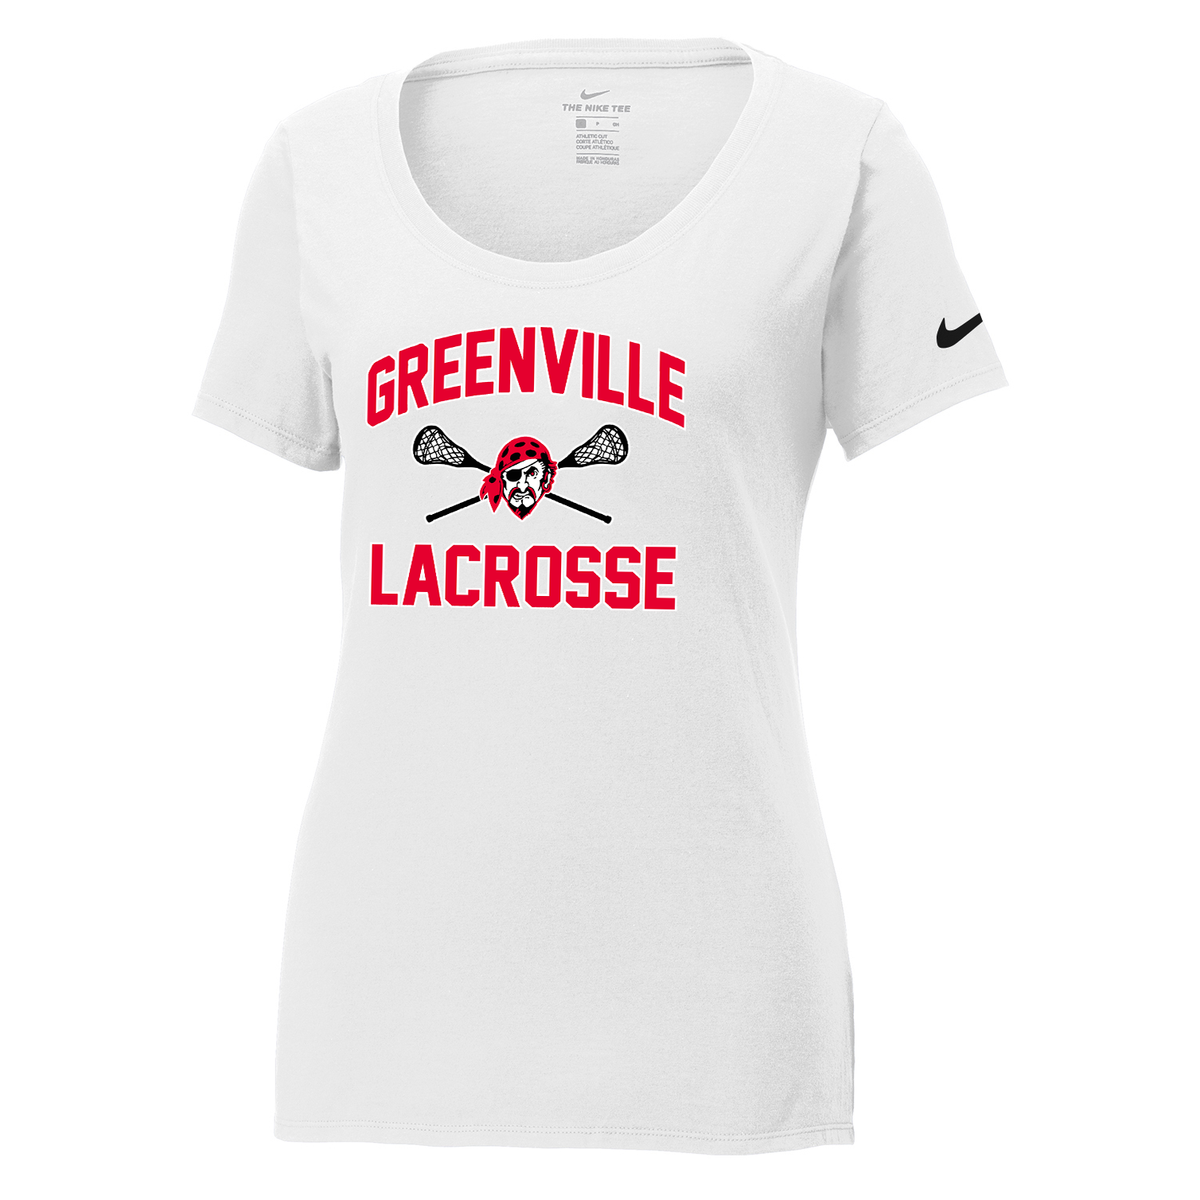 Greenville Girls Lacrosse Nike Ladies Core Cotton Tee